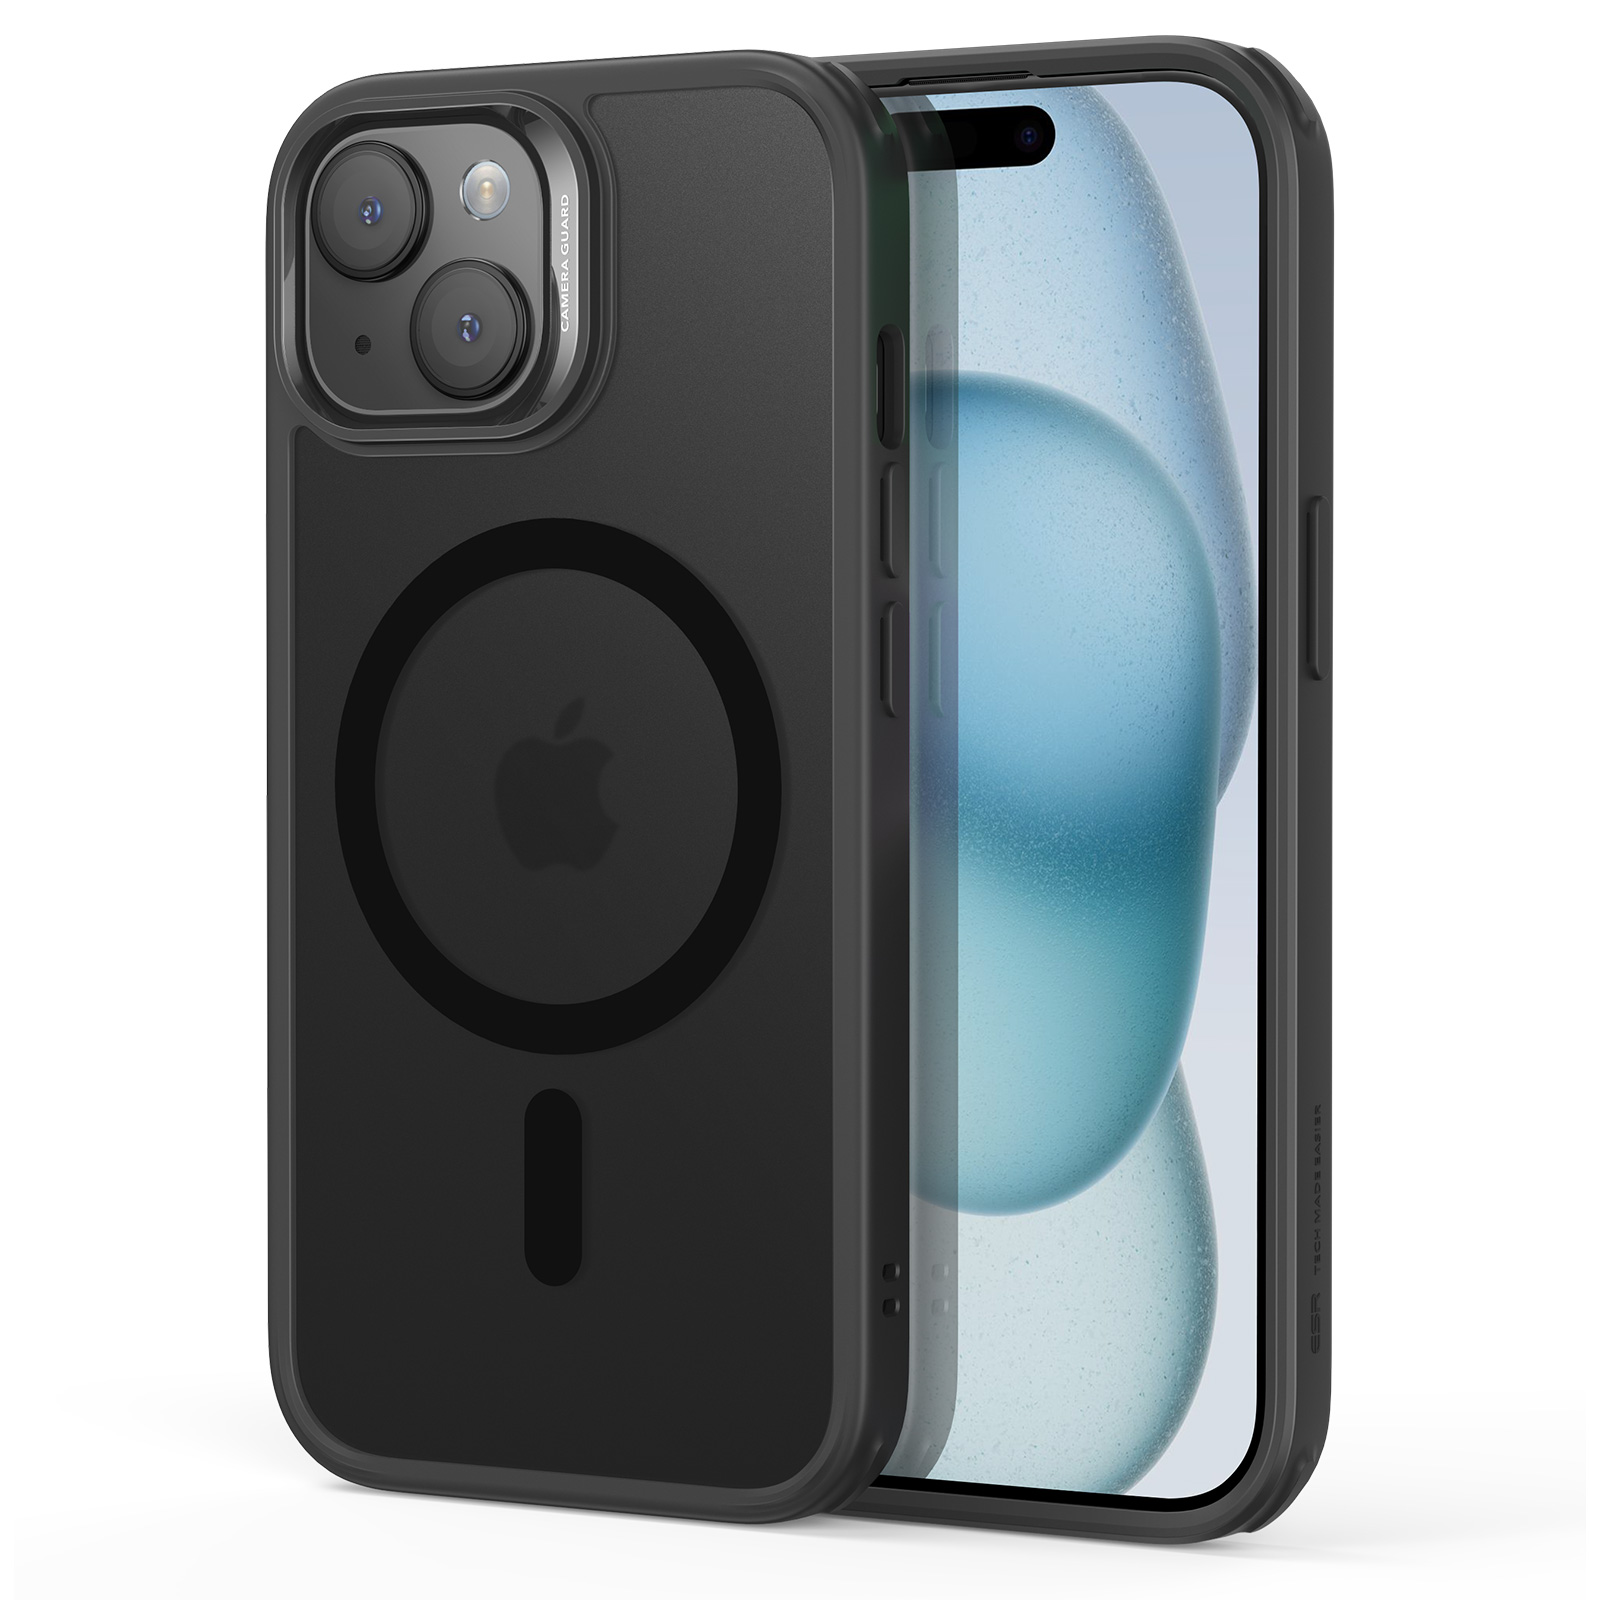 Funda ESR Hybrid case para iPhone 12 PRO MAX - Transparente borde Negro ESR  Hybrid